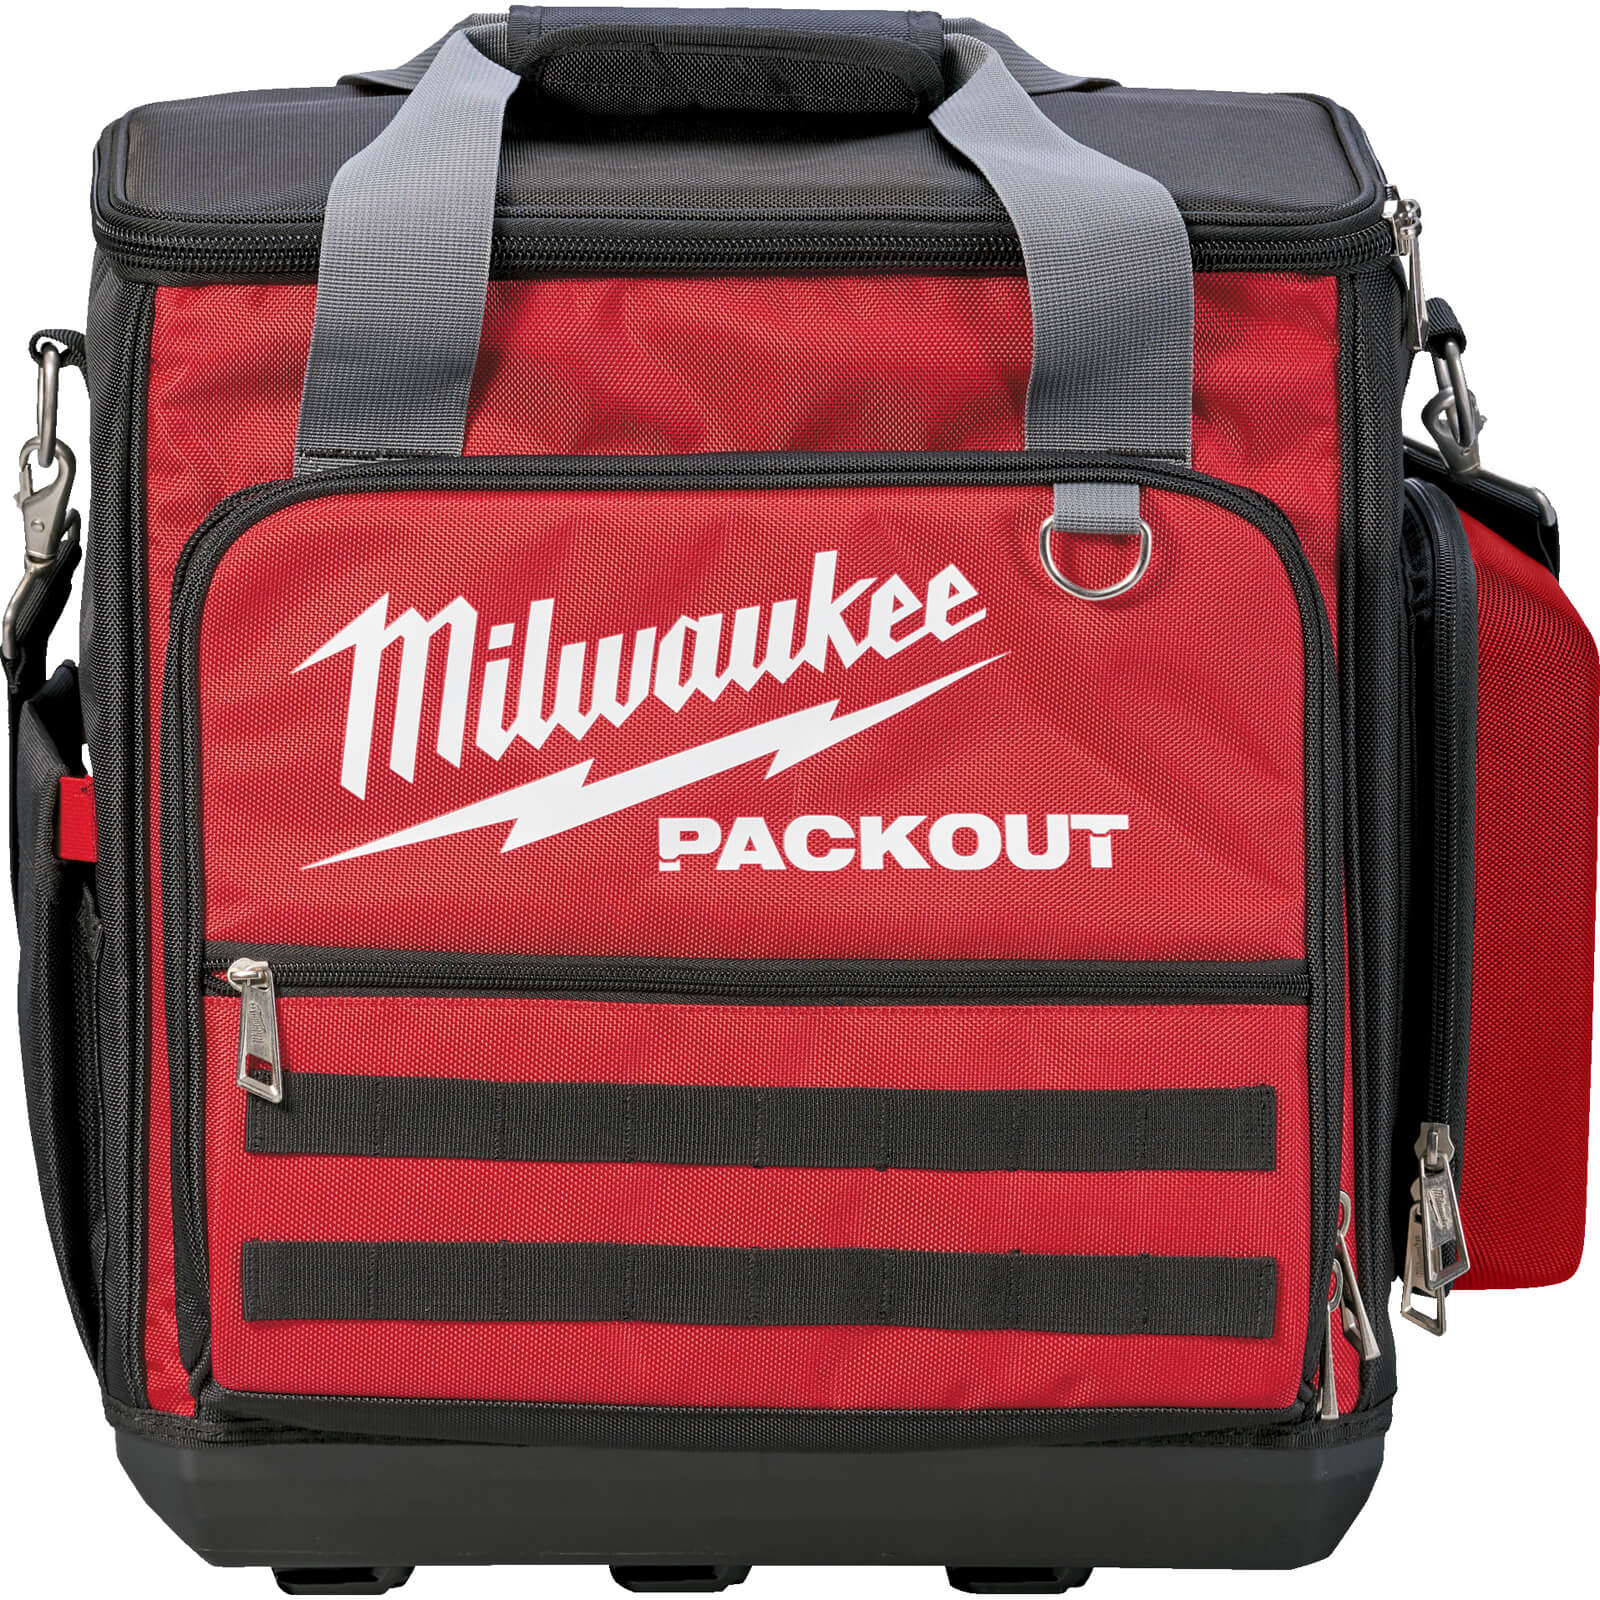 Milwaukee Packout Tool Tech Bag